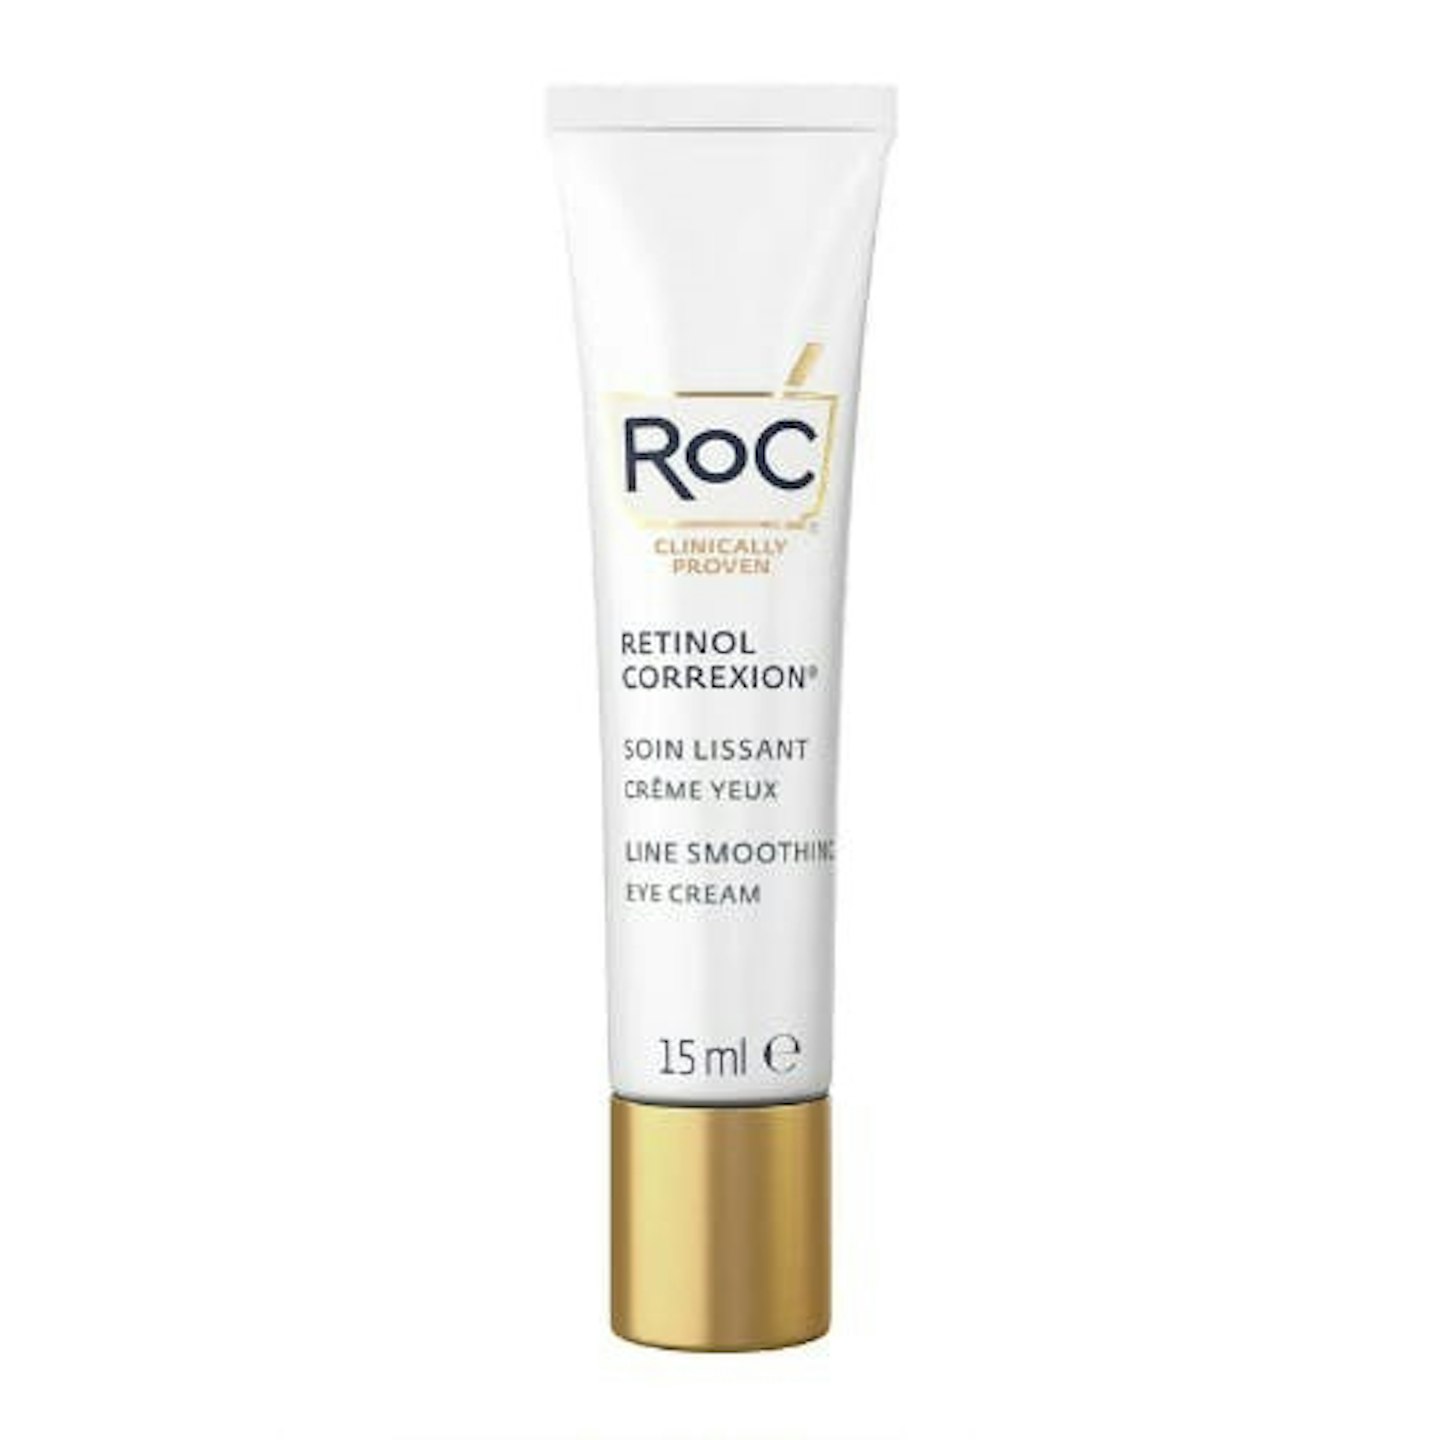 RoC Retinol Correxion Line Smoothing Eye Cream, 15ml